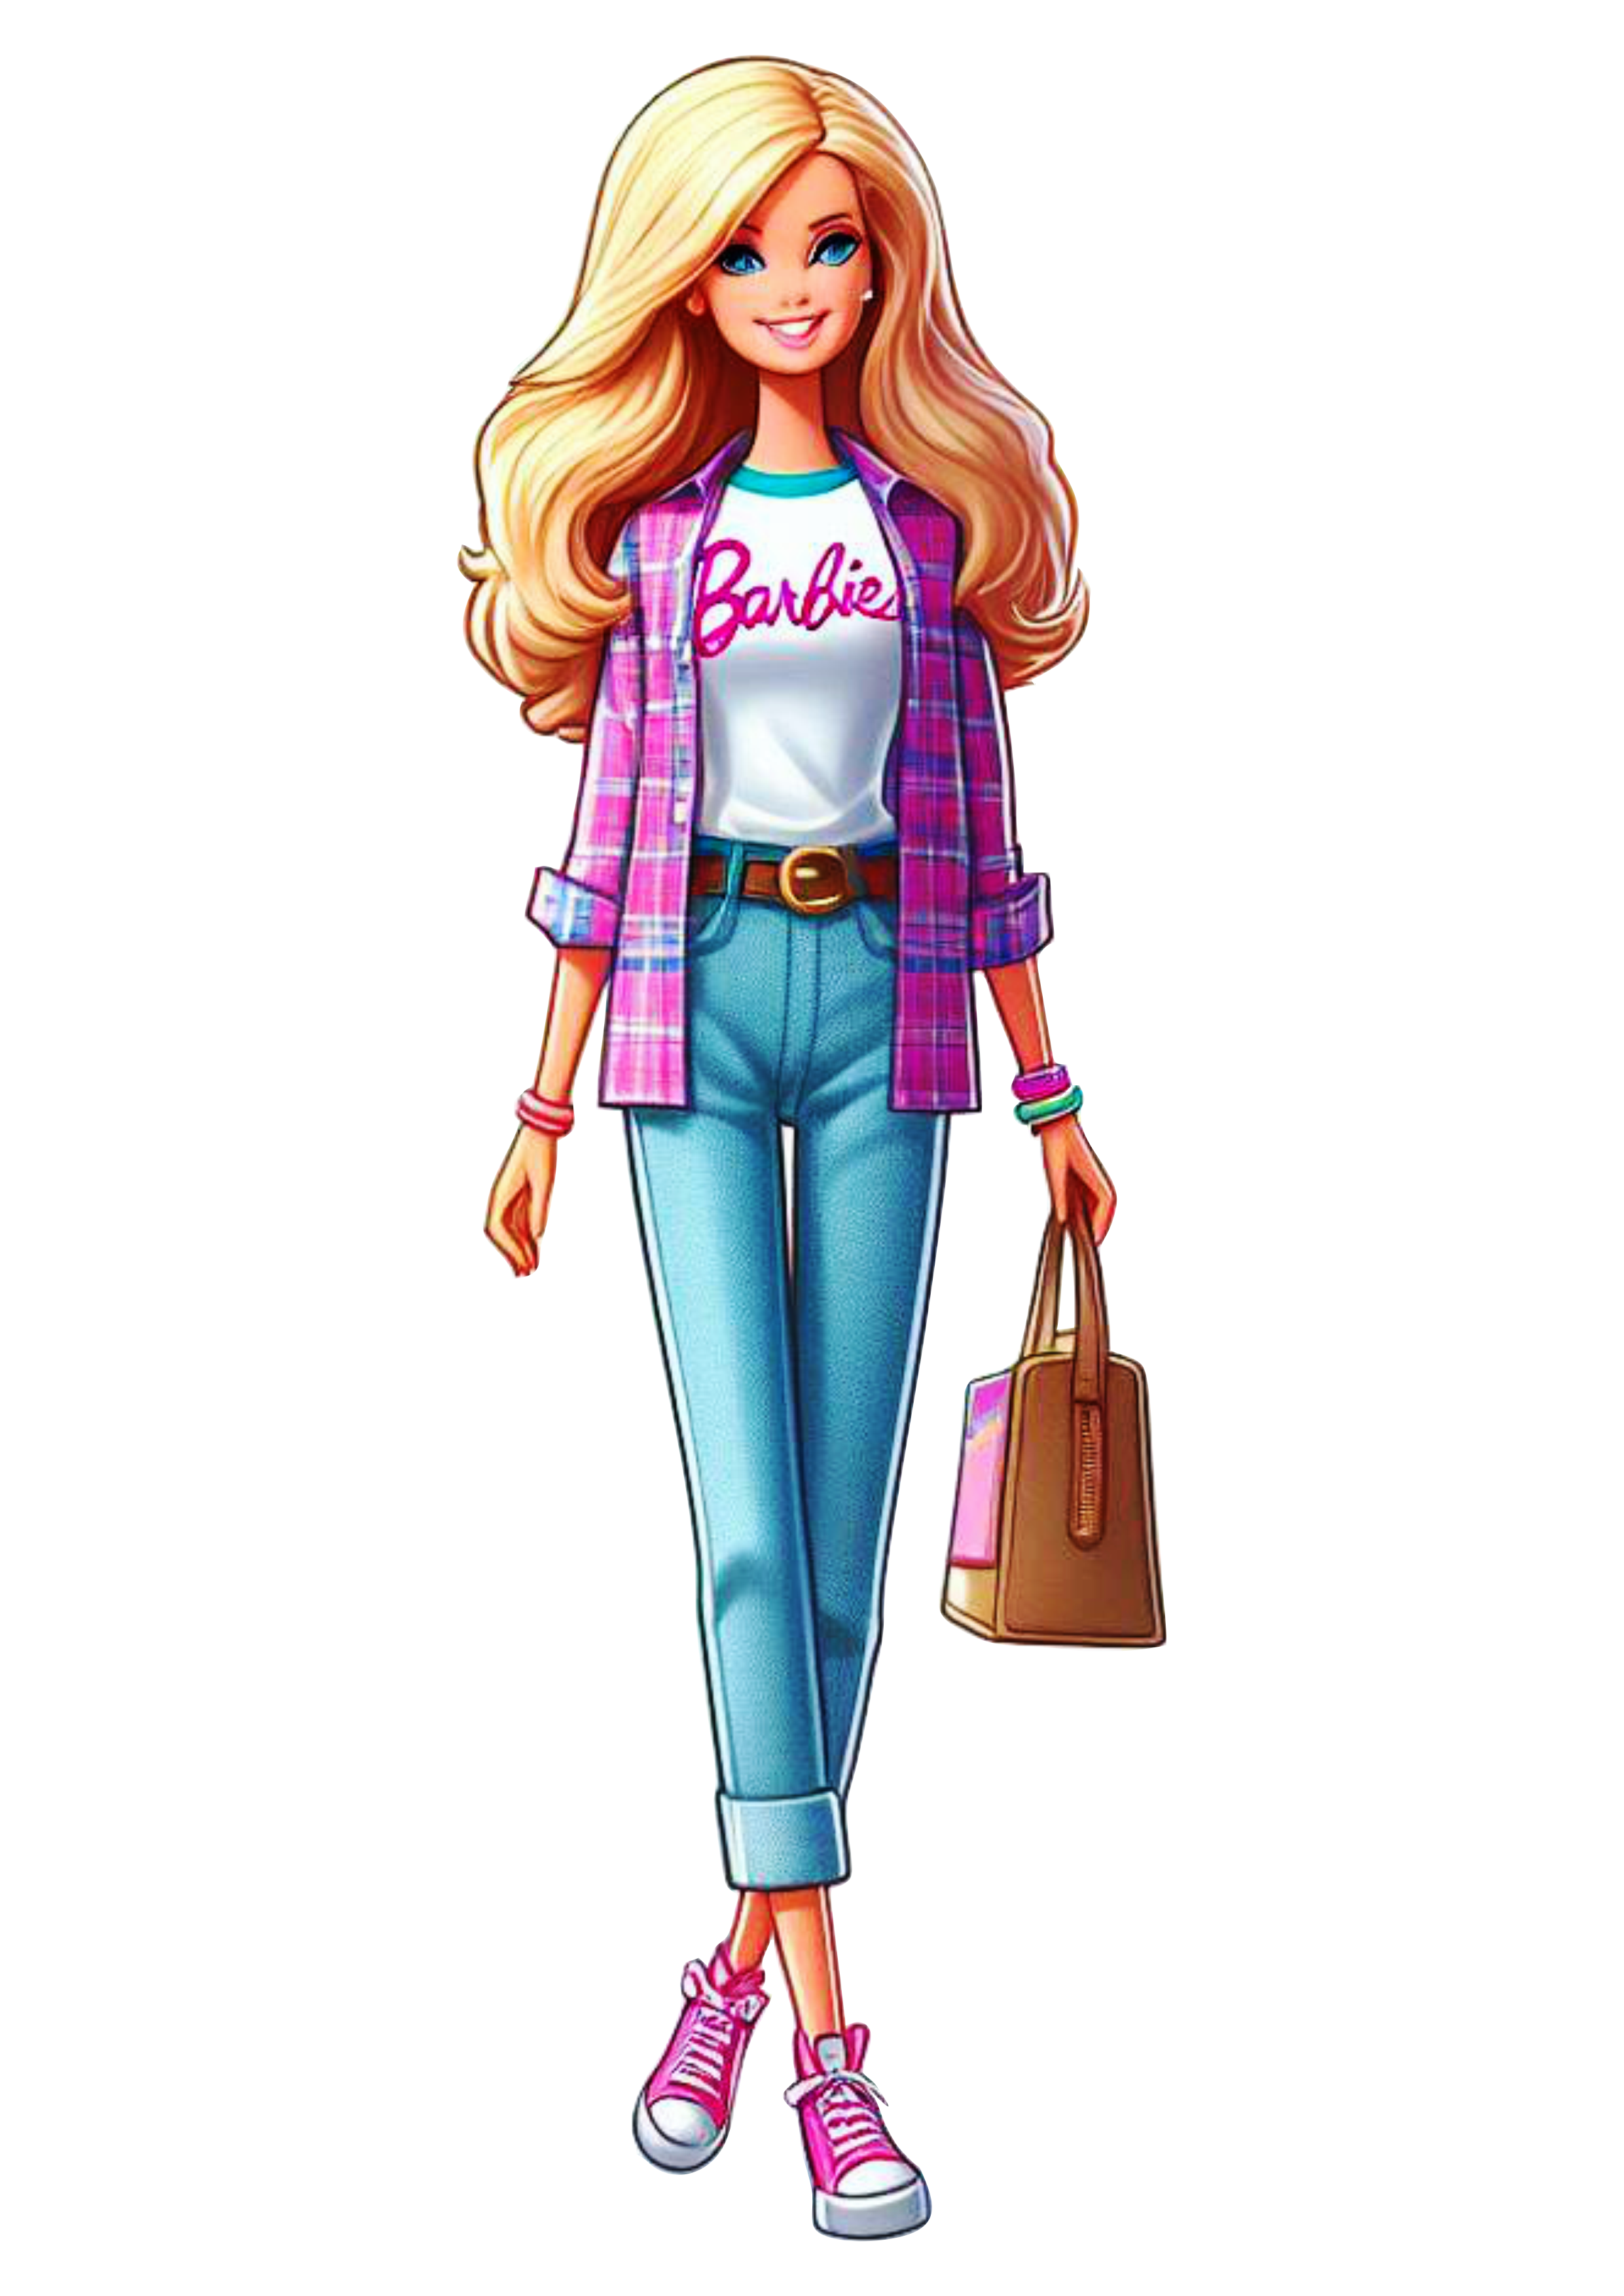 Barbie png image